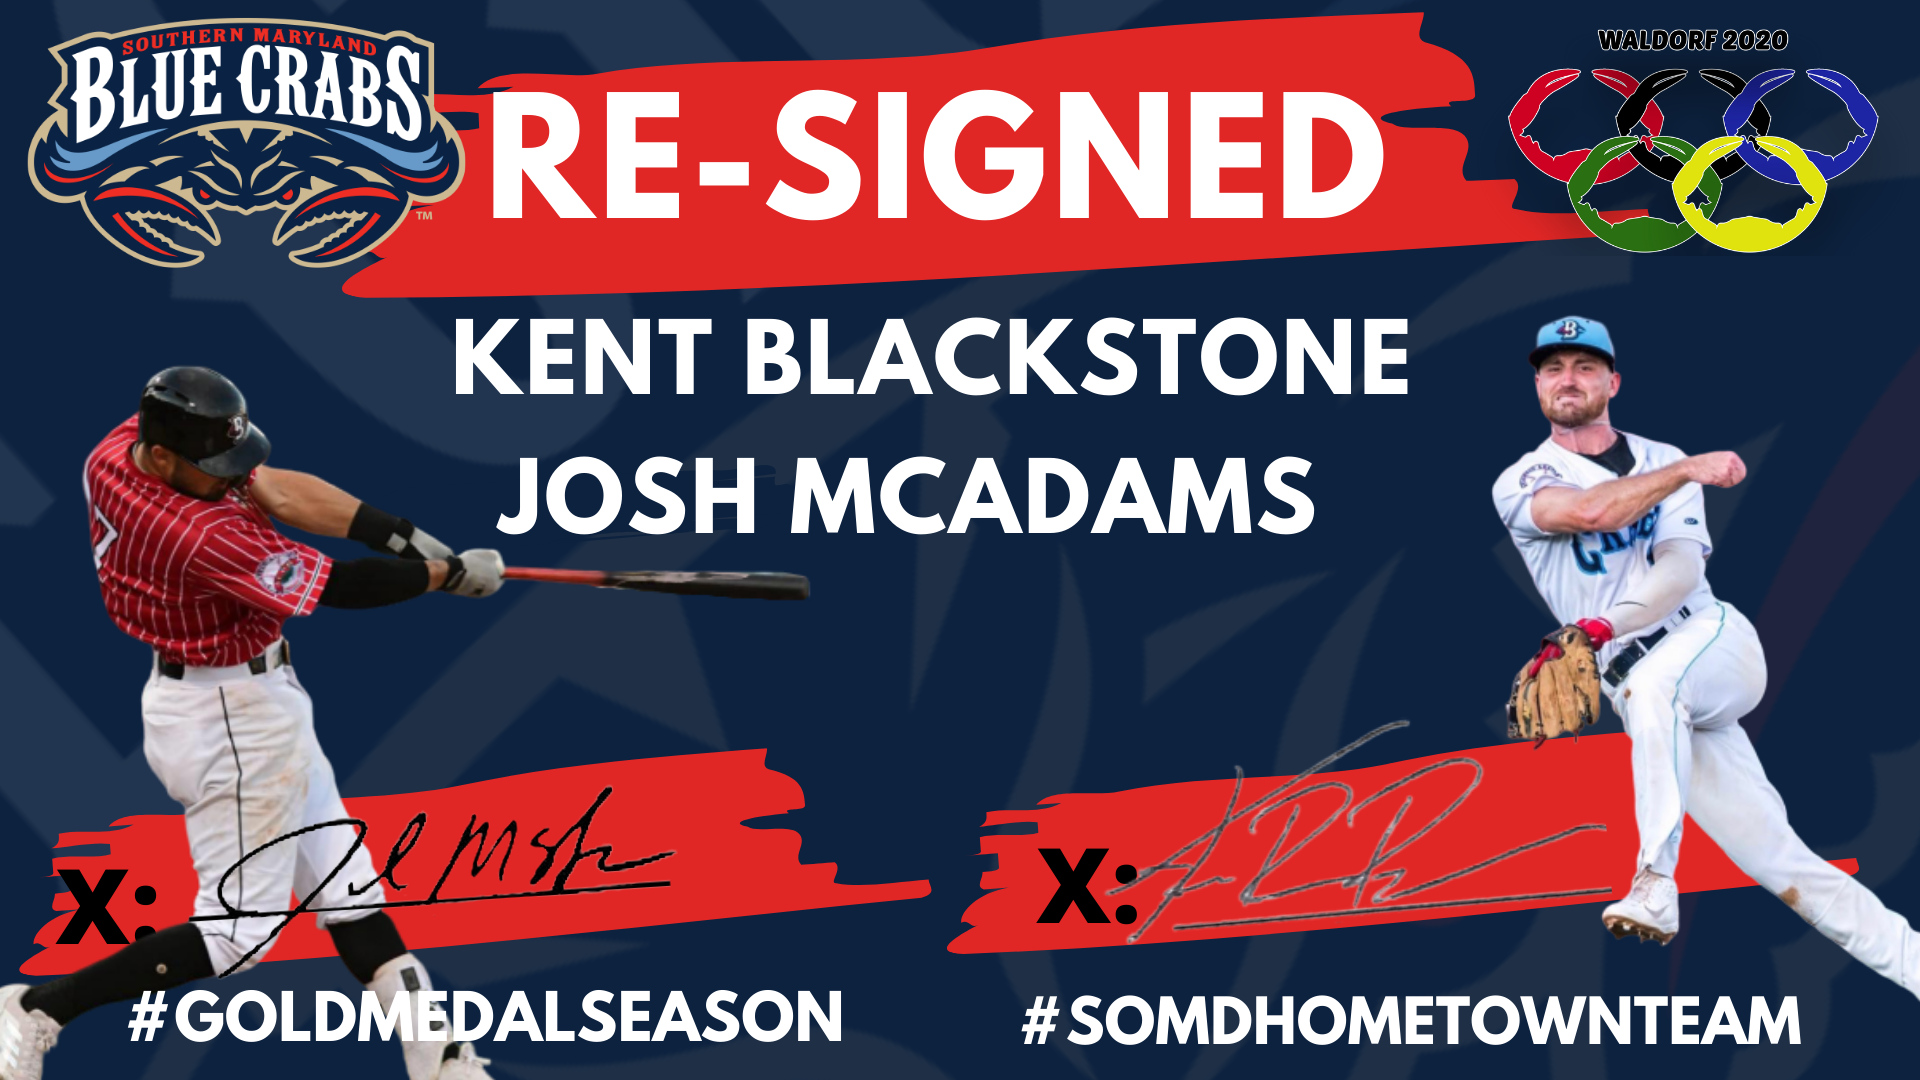 Blue Crabs Re-Sign Kent Blackstone, Josh McAdams